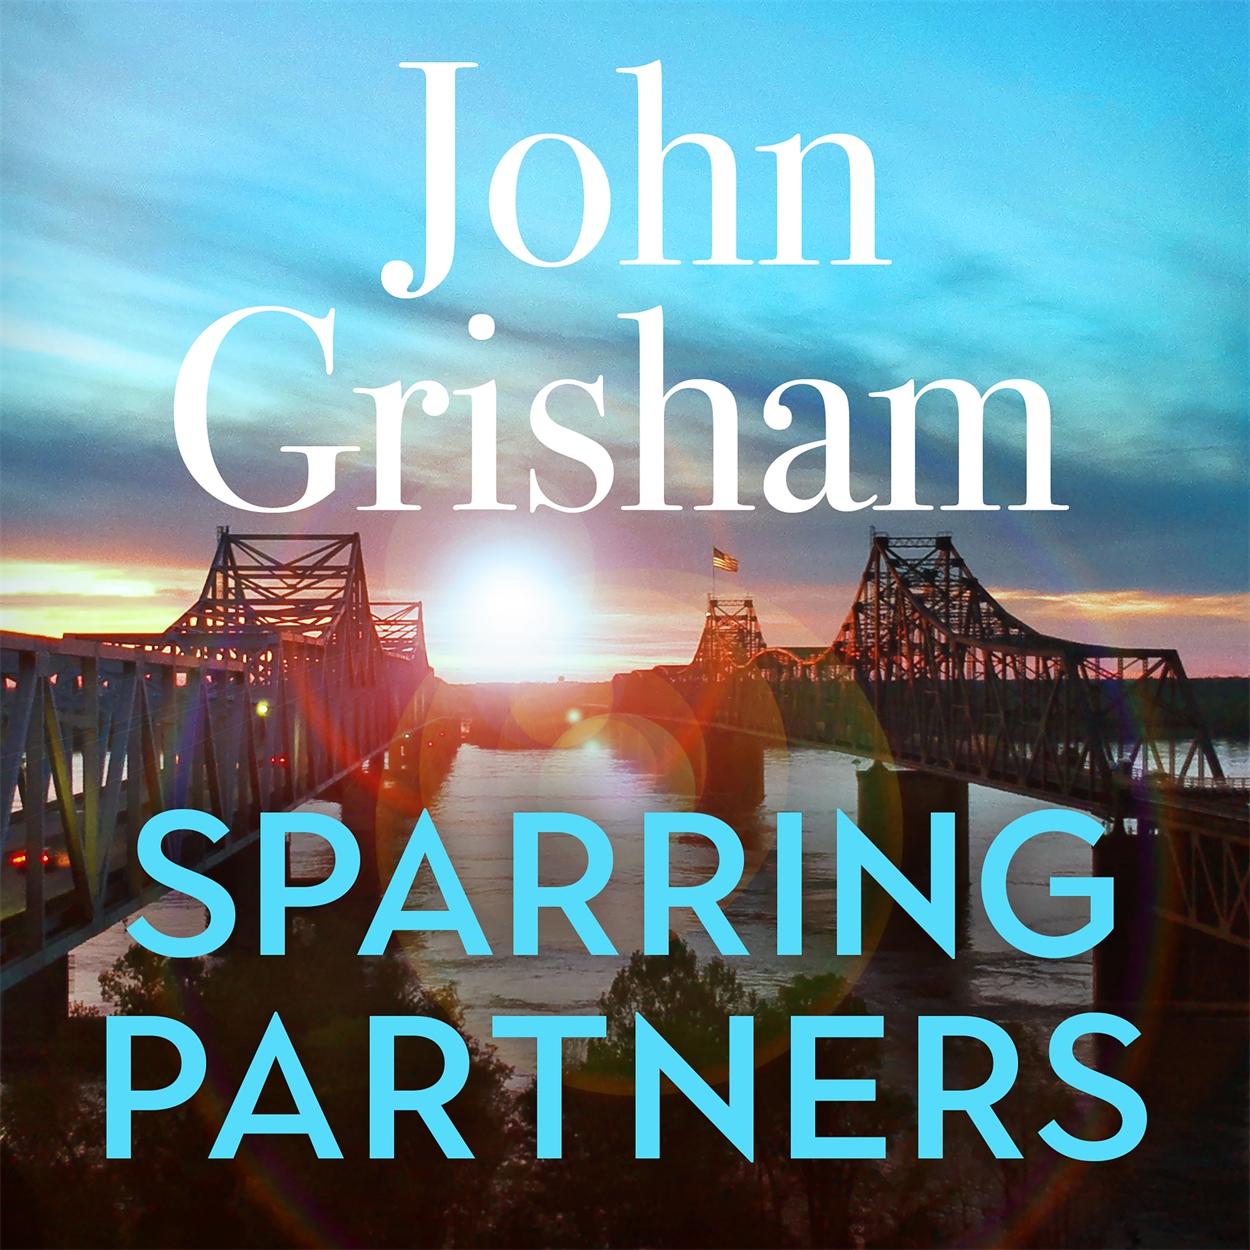 the partner john grisham review